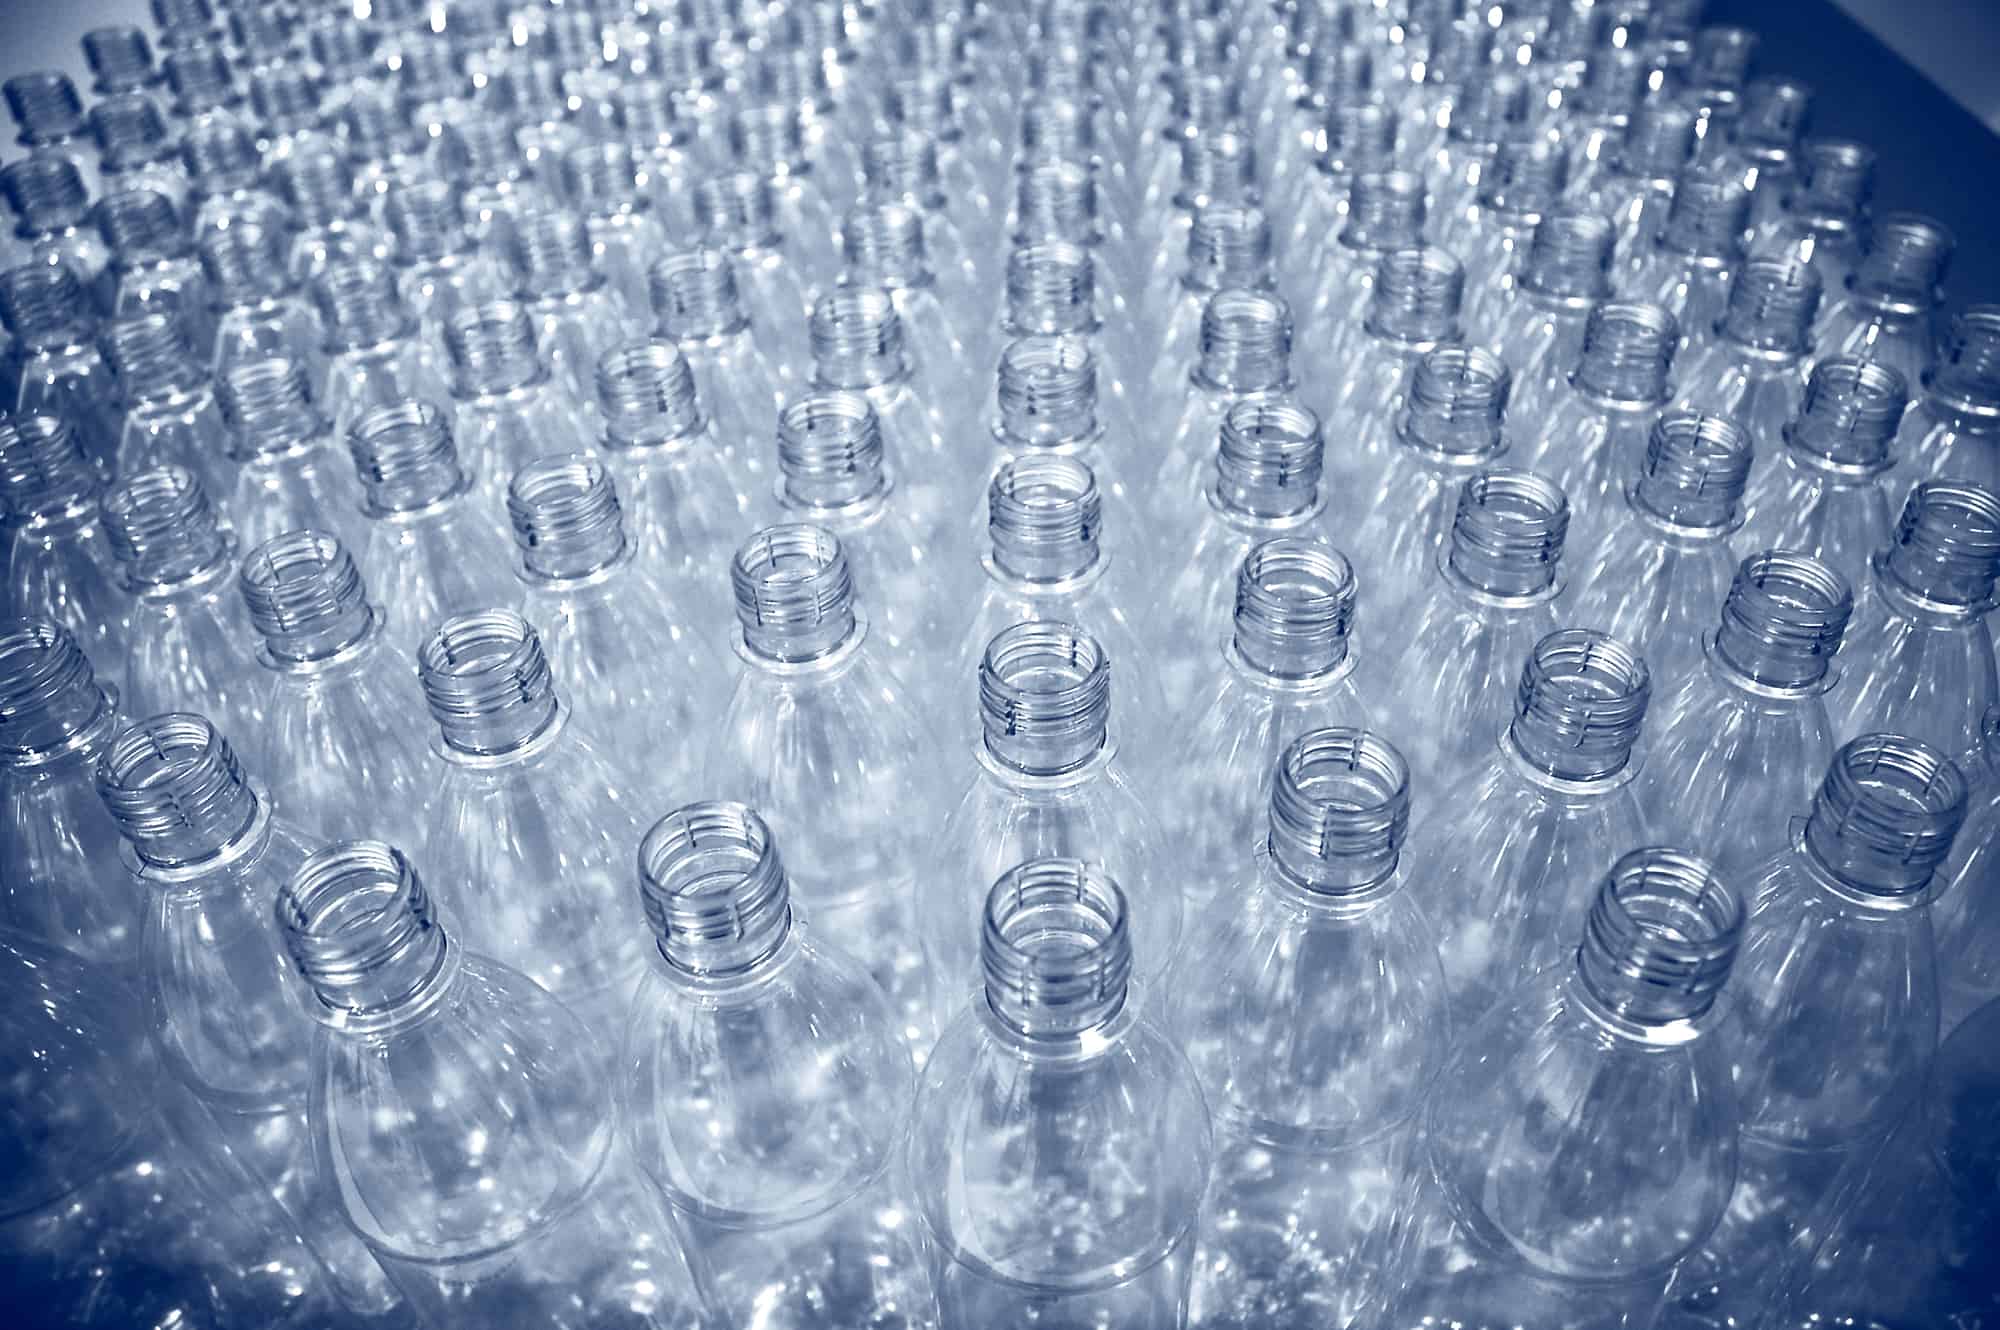 rows of empty plastic bottles at bottling plant